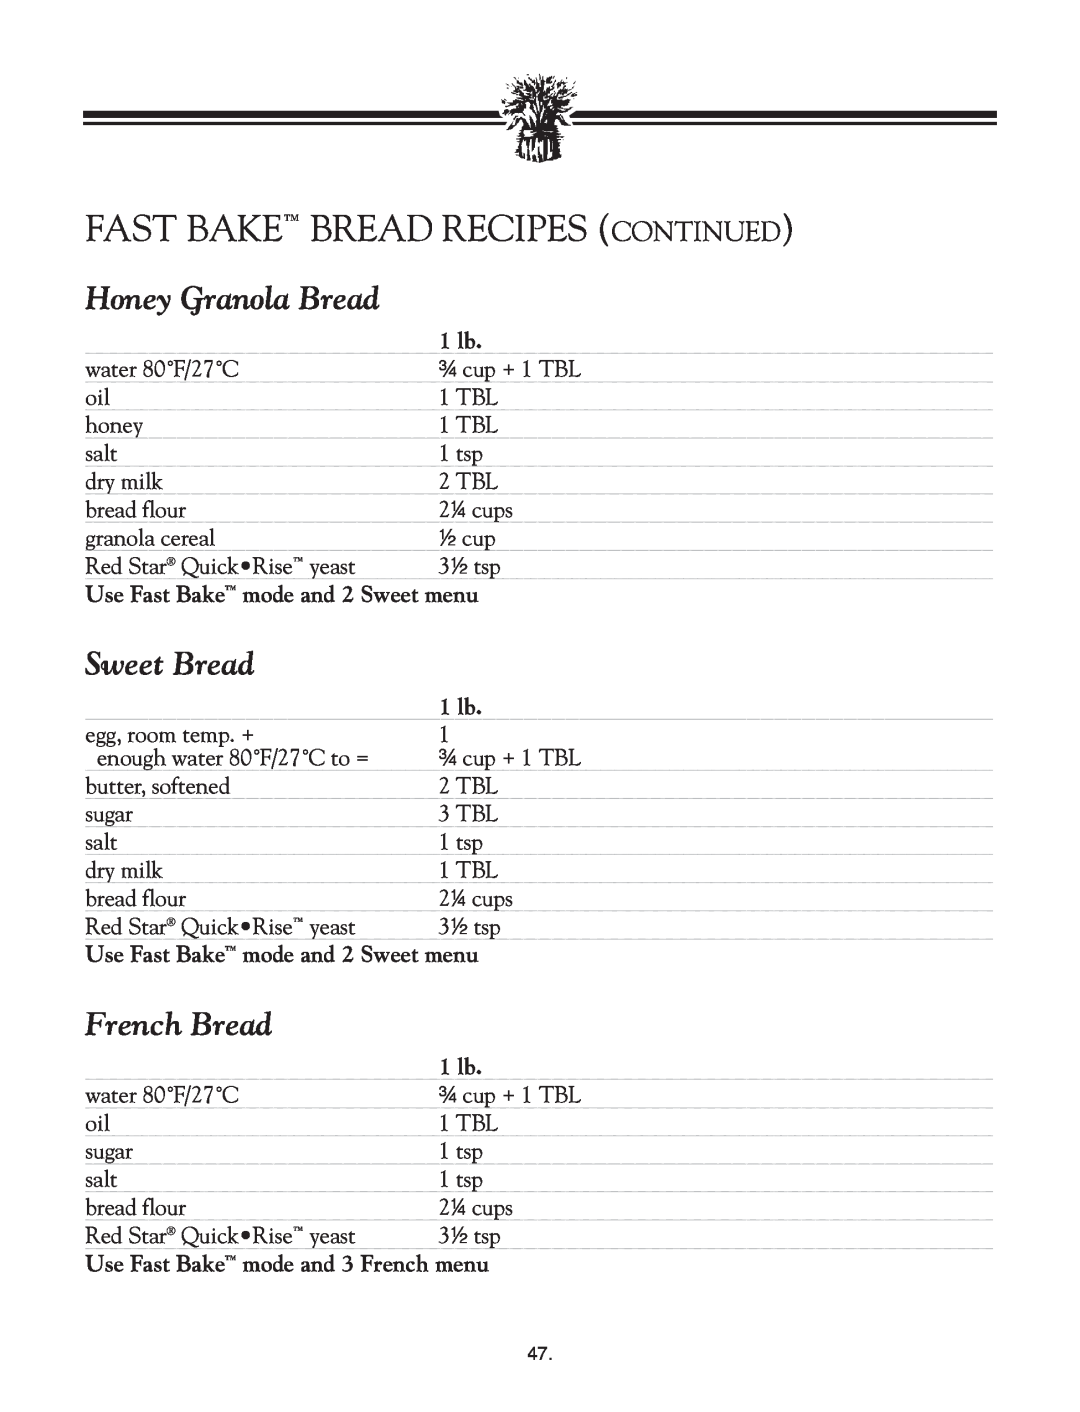 Breadman TR2828G instruction manual Fast Bake Bread Recipes Continued, Honey Granola Bread, Sweet Bread, French Bread, 1 lb 